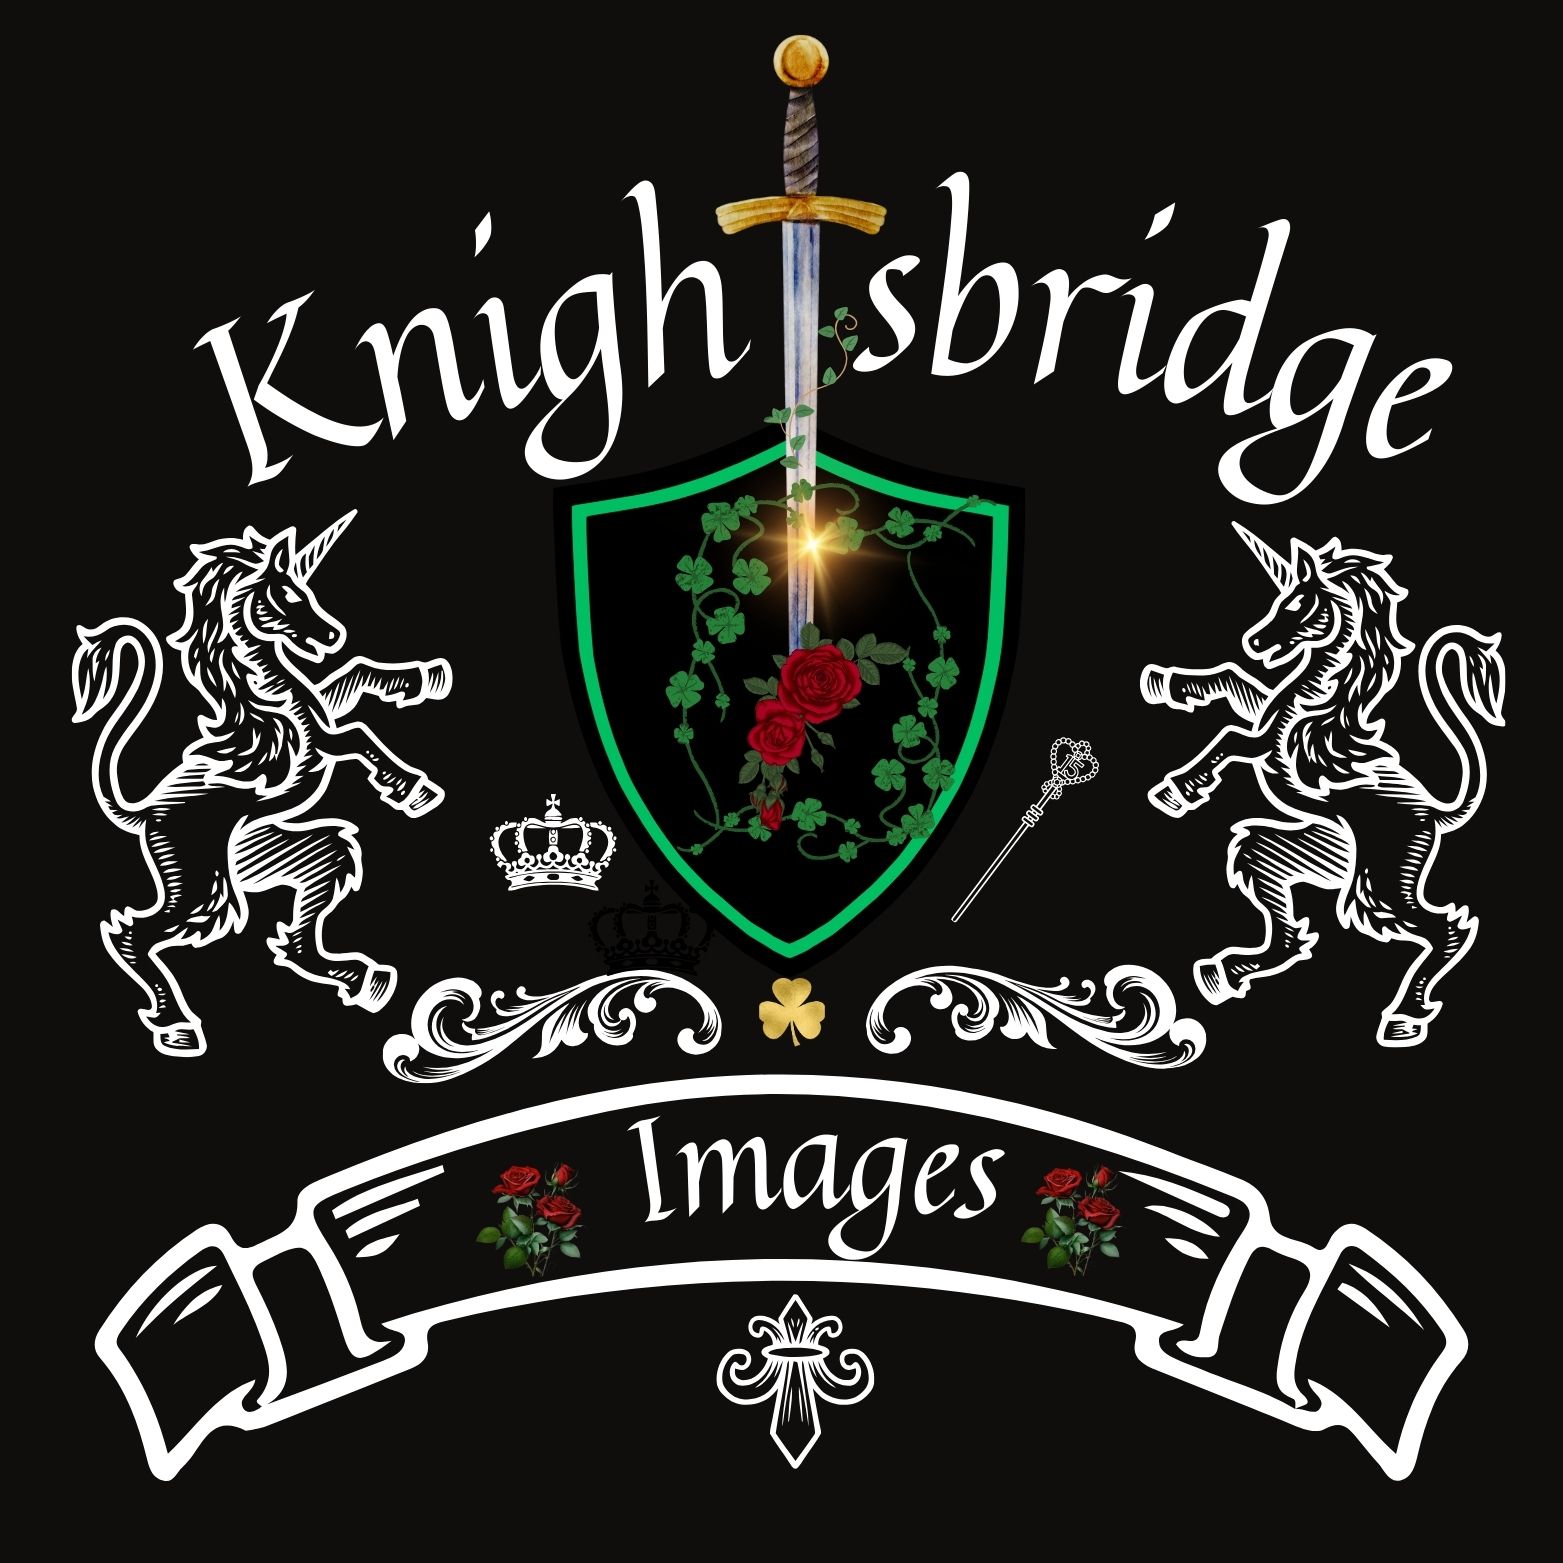 www.knightsbridgeimages.com